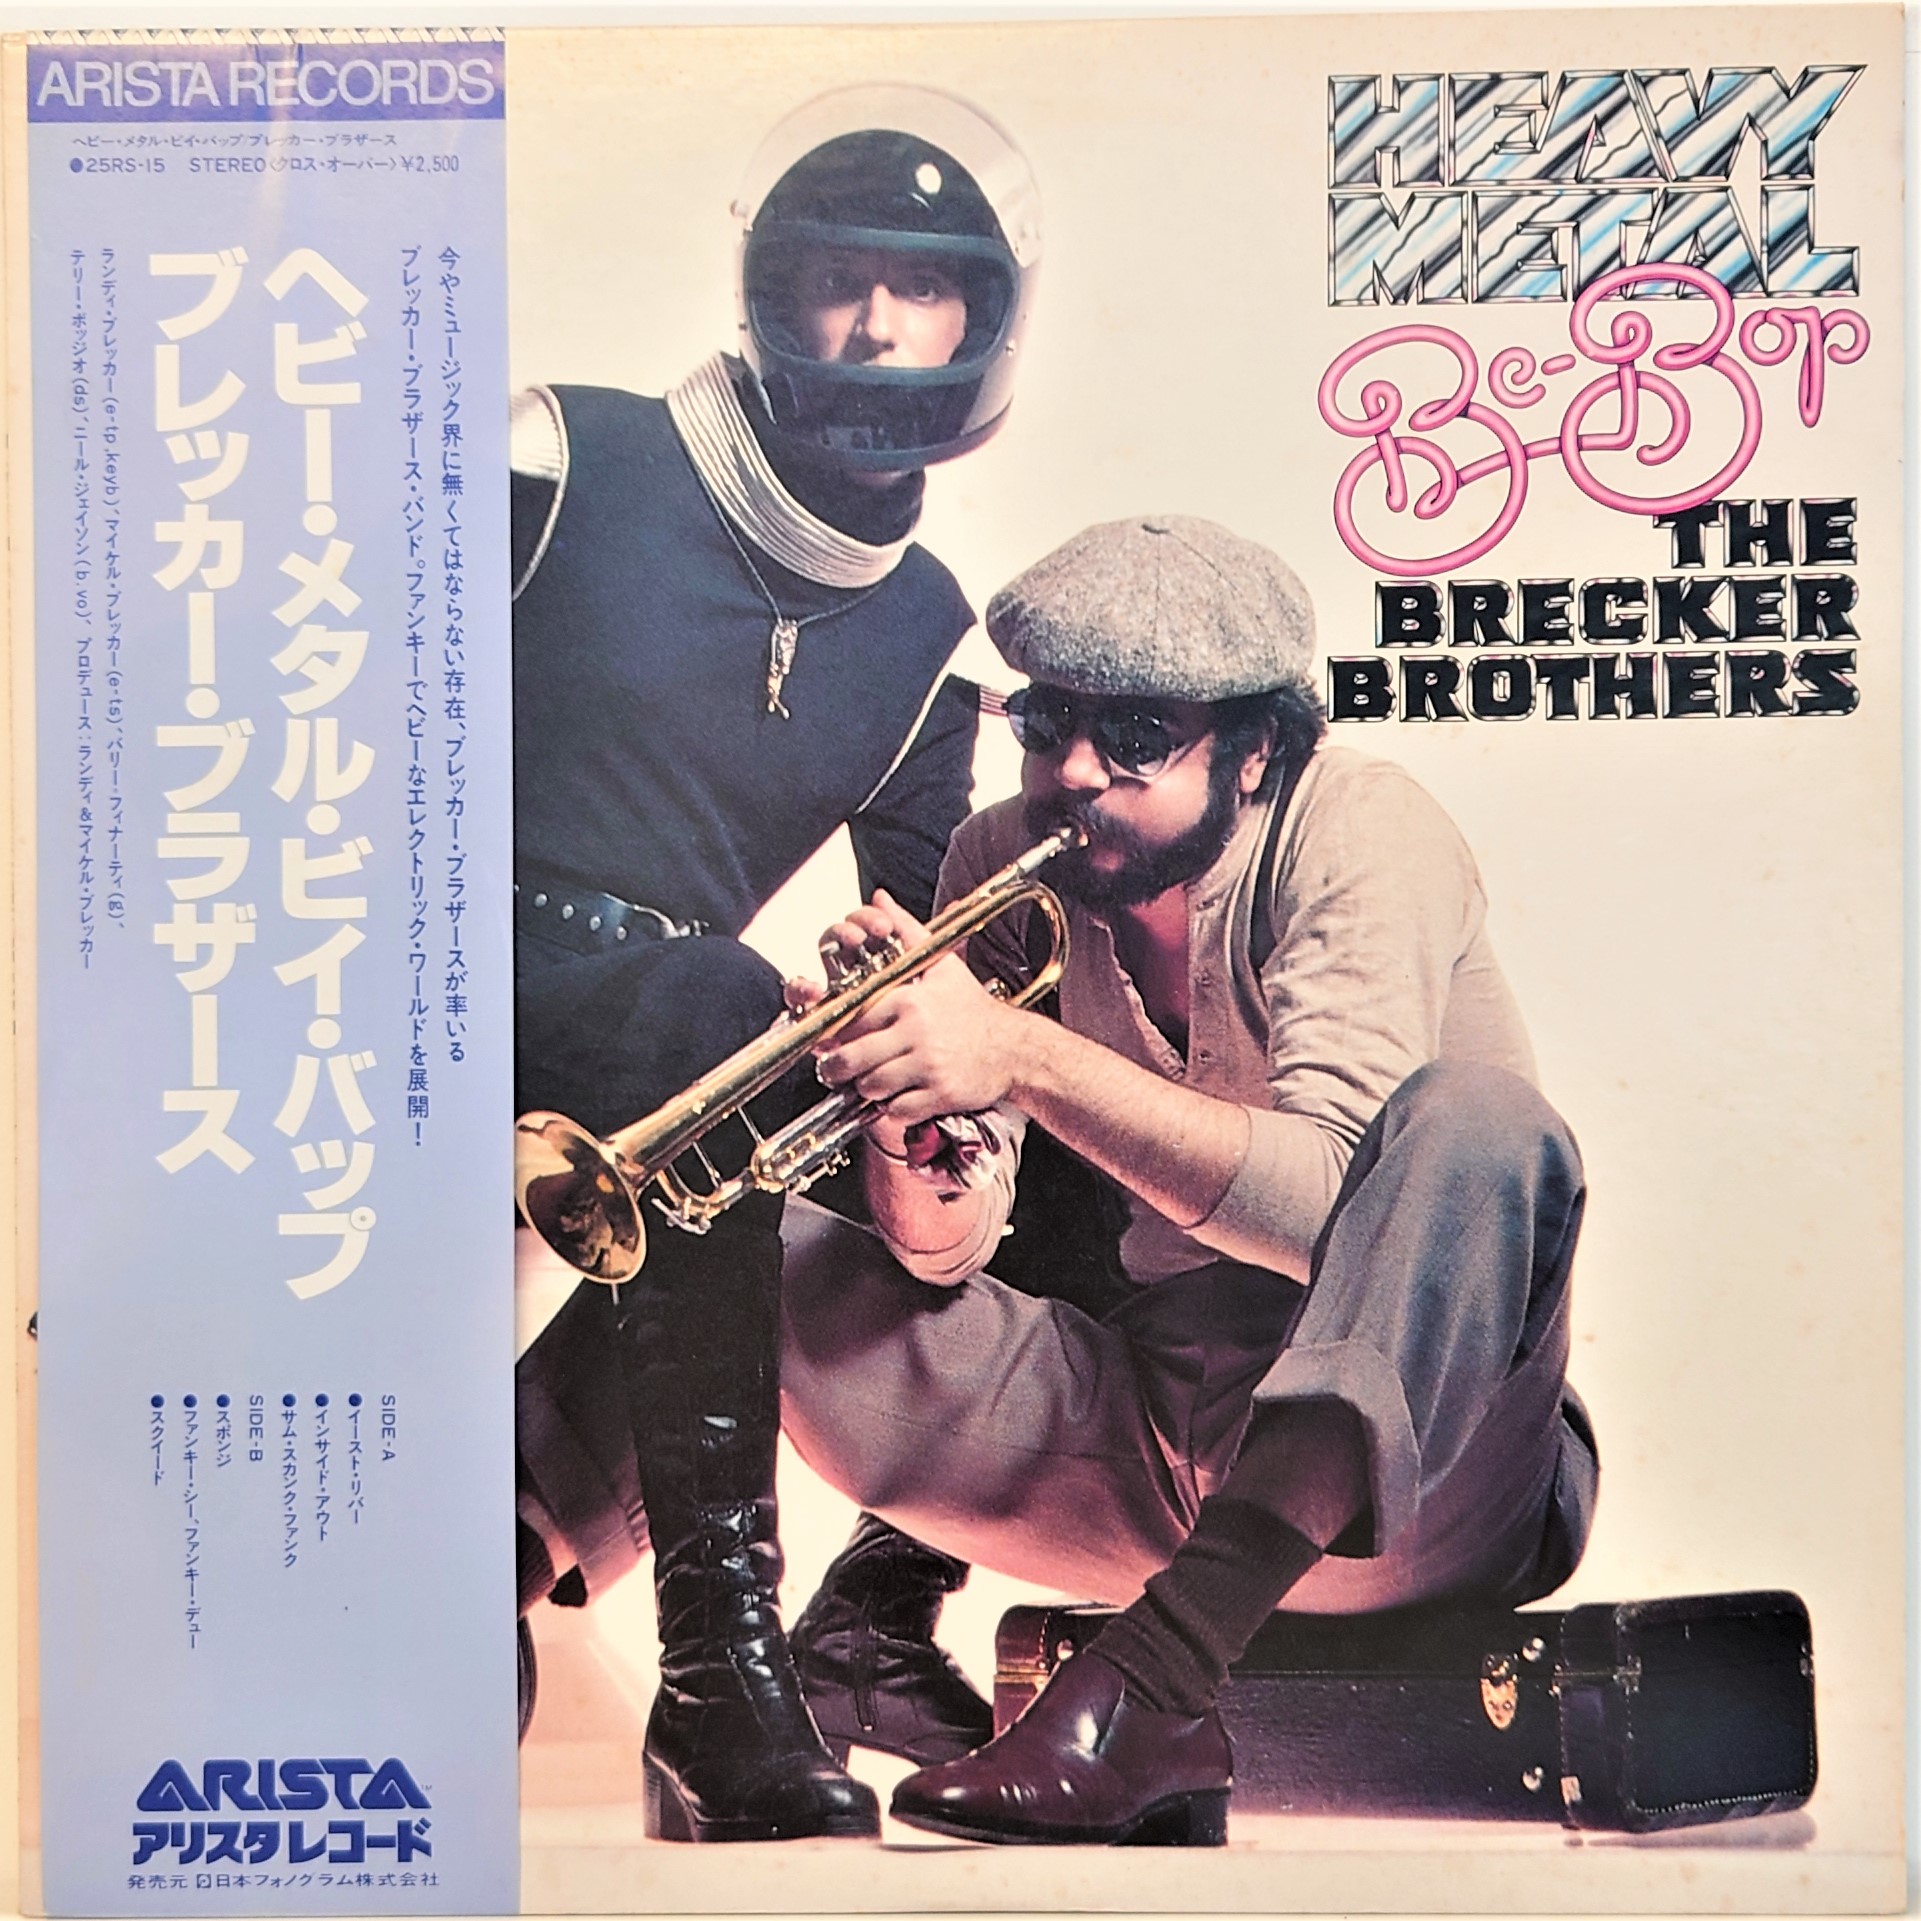 The Brecker Brothers Heavy Metal Be Bop 中古レコード通販 買取のアカル レコーズ